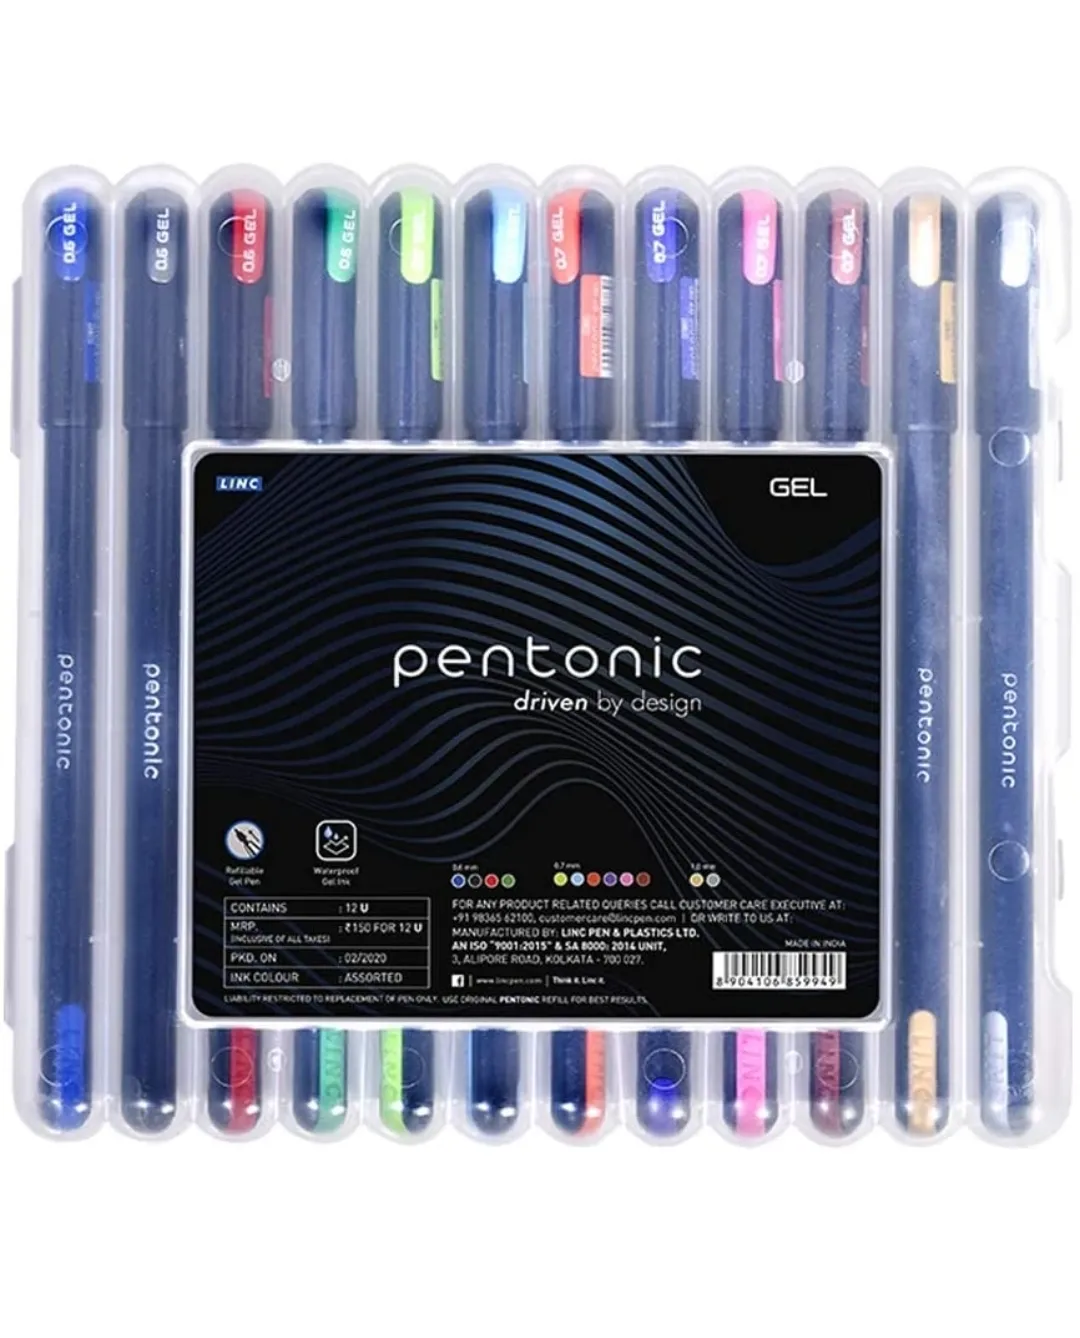 Linc Pentonic Multi Colour Gel Pen 1 Pack of 12 Pen